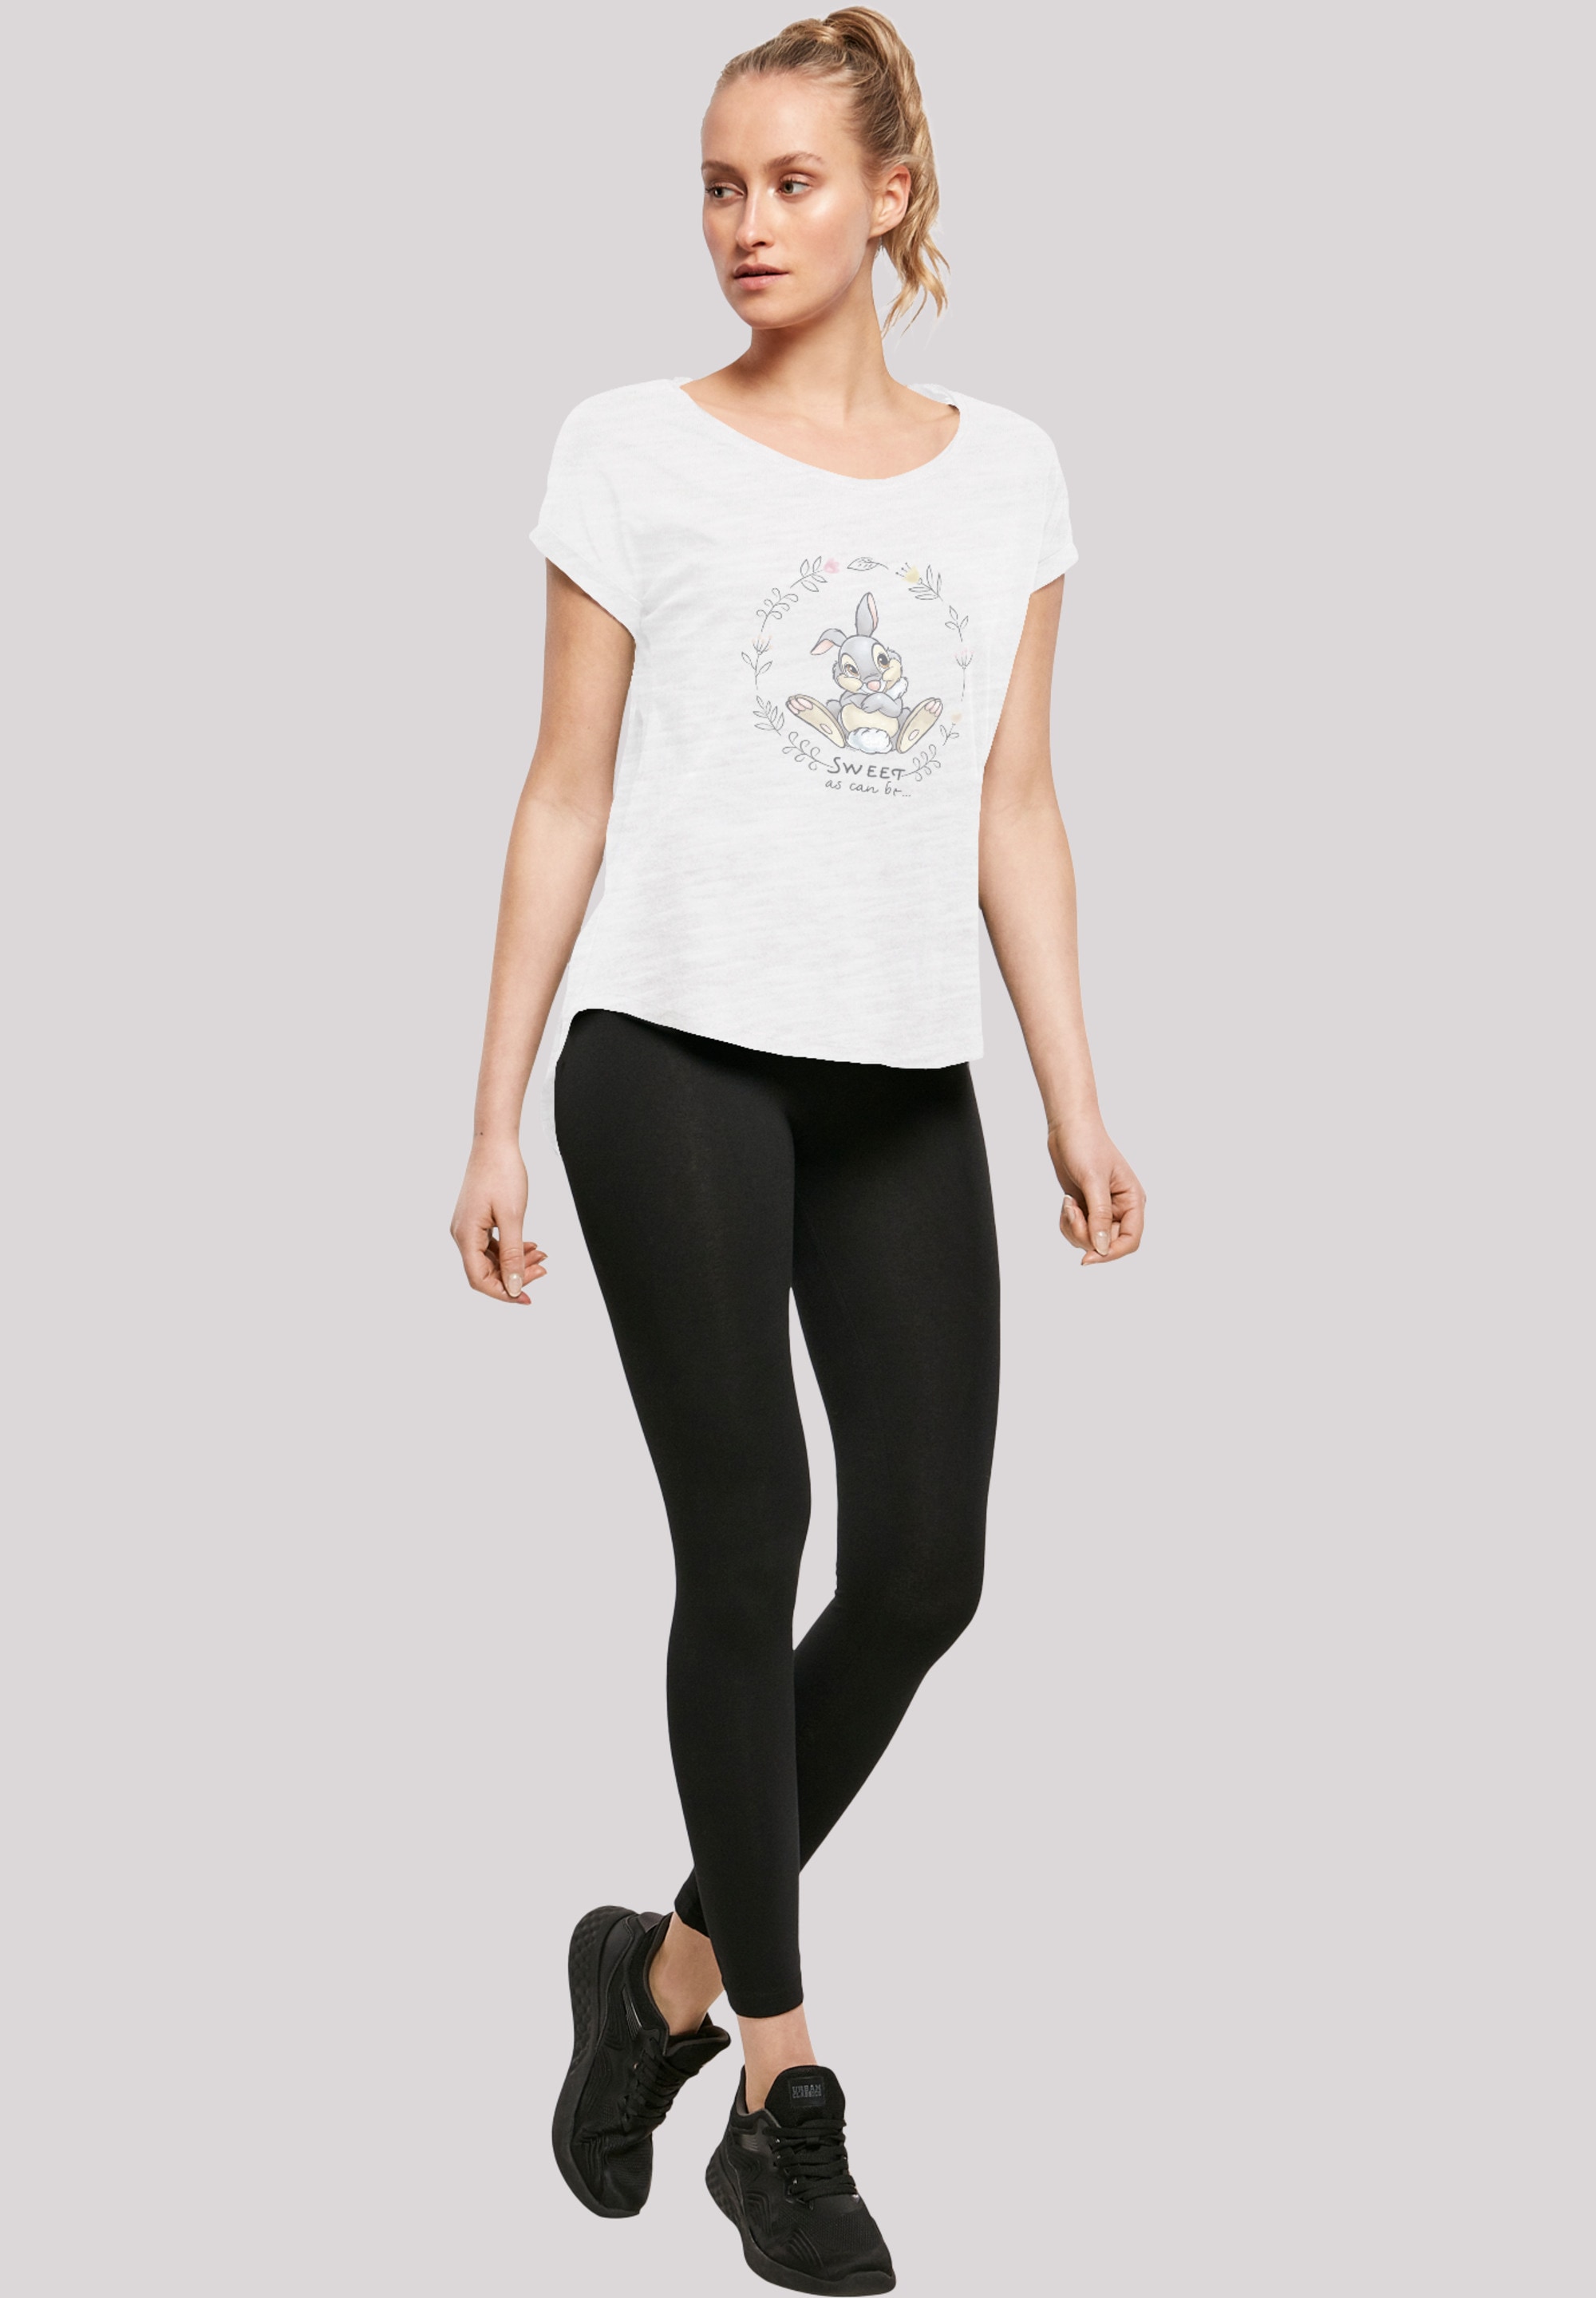 F4NT4STIC T-Shirt »Disney Bambi Klopfer Thumper Sweet As Can Be«, Print  bestellen | I'm walking